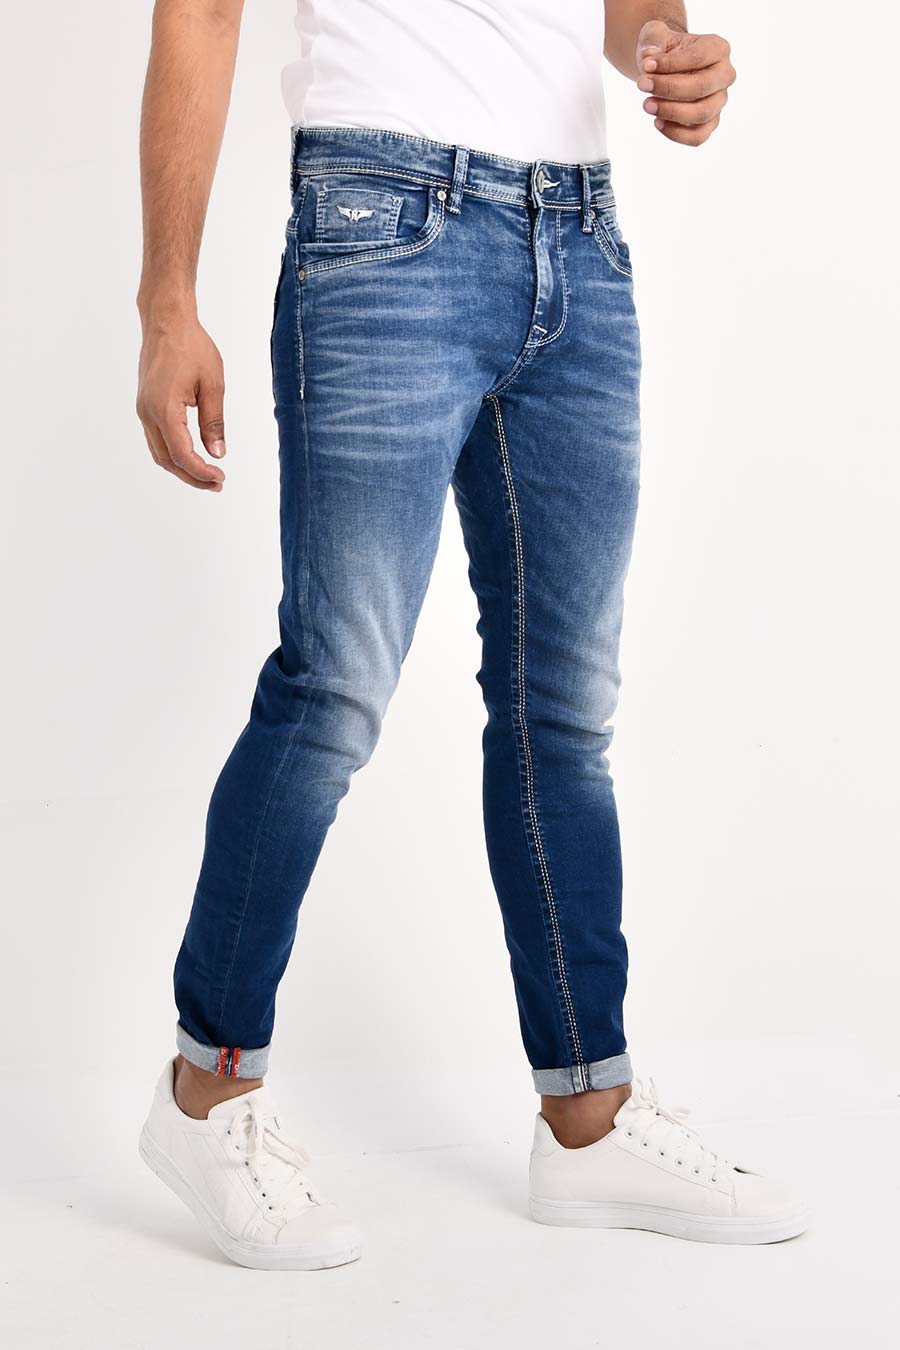 Men’s Denim Jeans-RJ4049